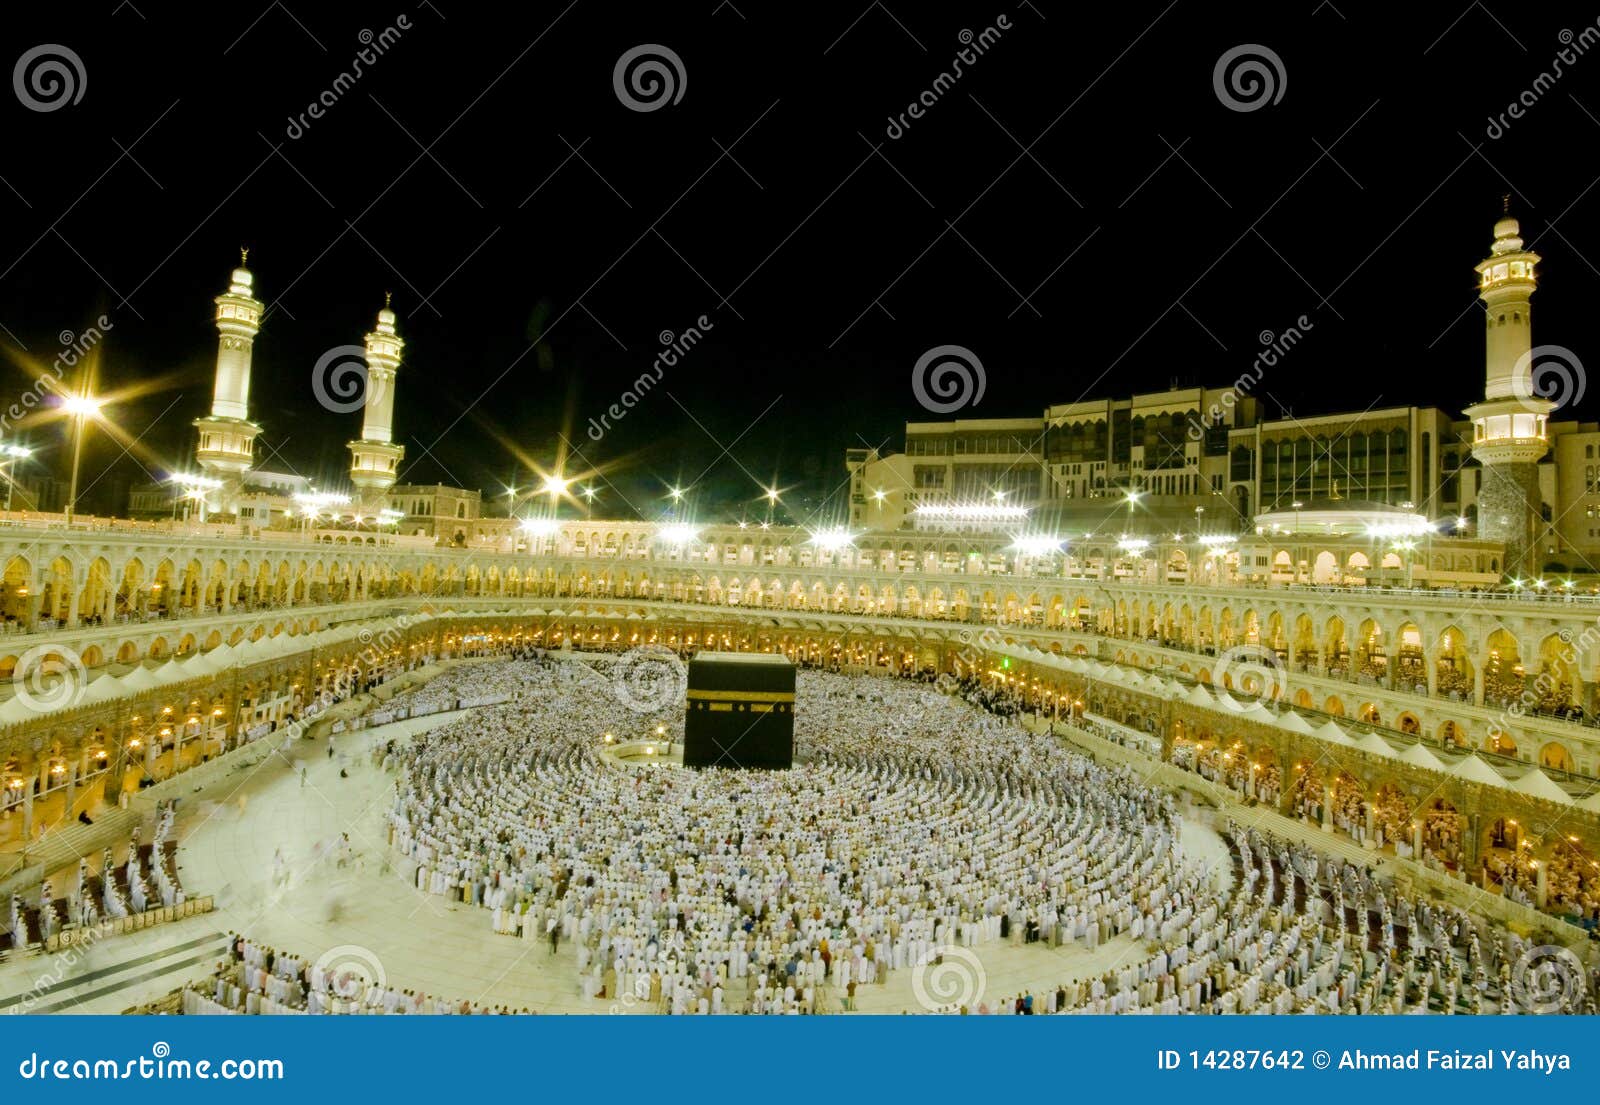 Kaaba in Makkah, Kingdom of Saudi Arabia. Editorial Photography ...